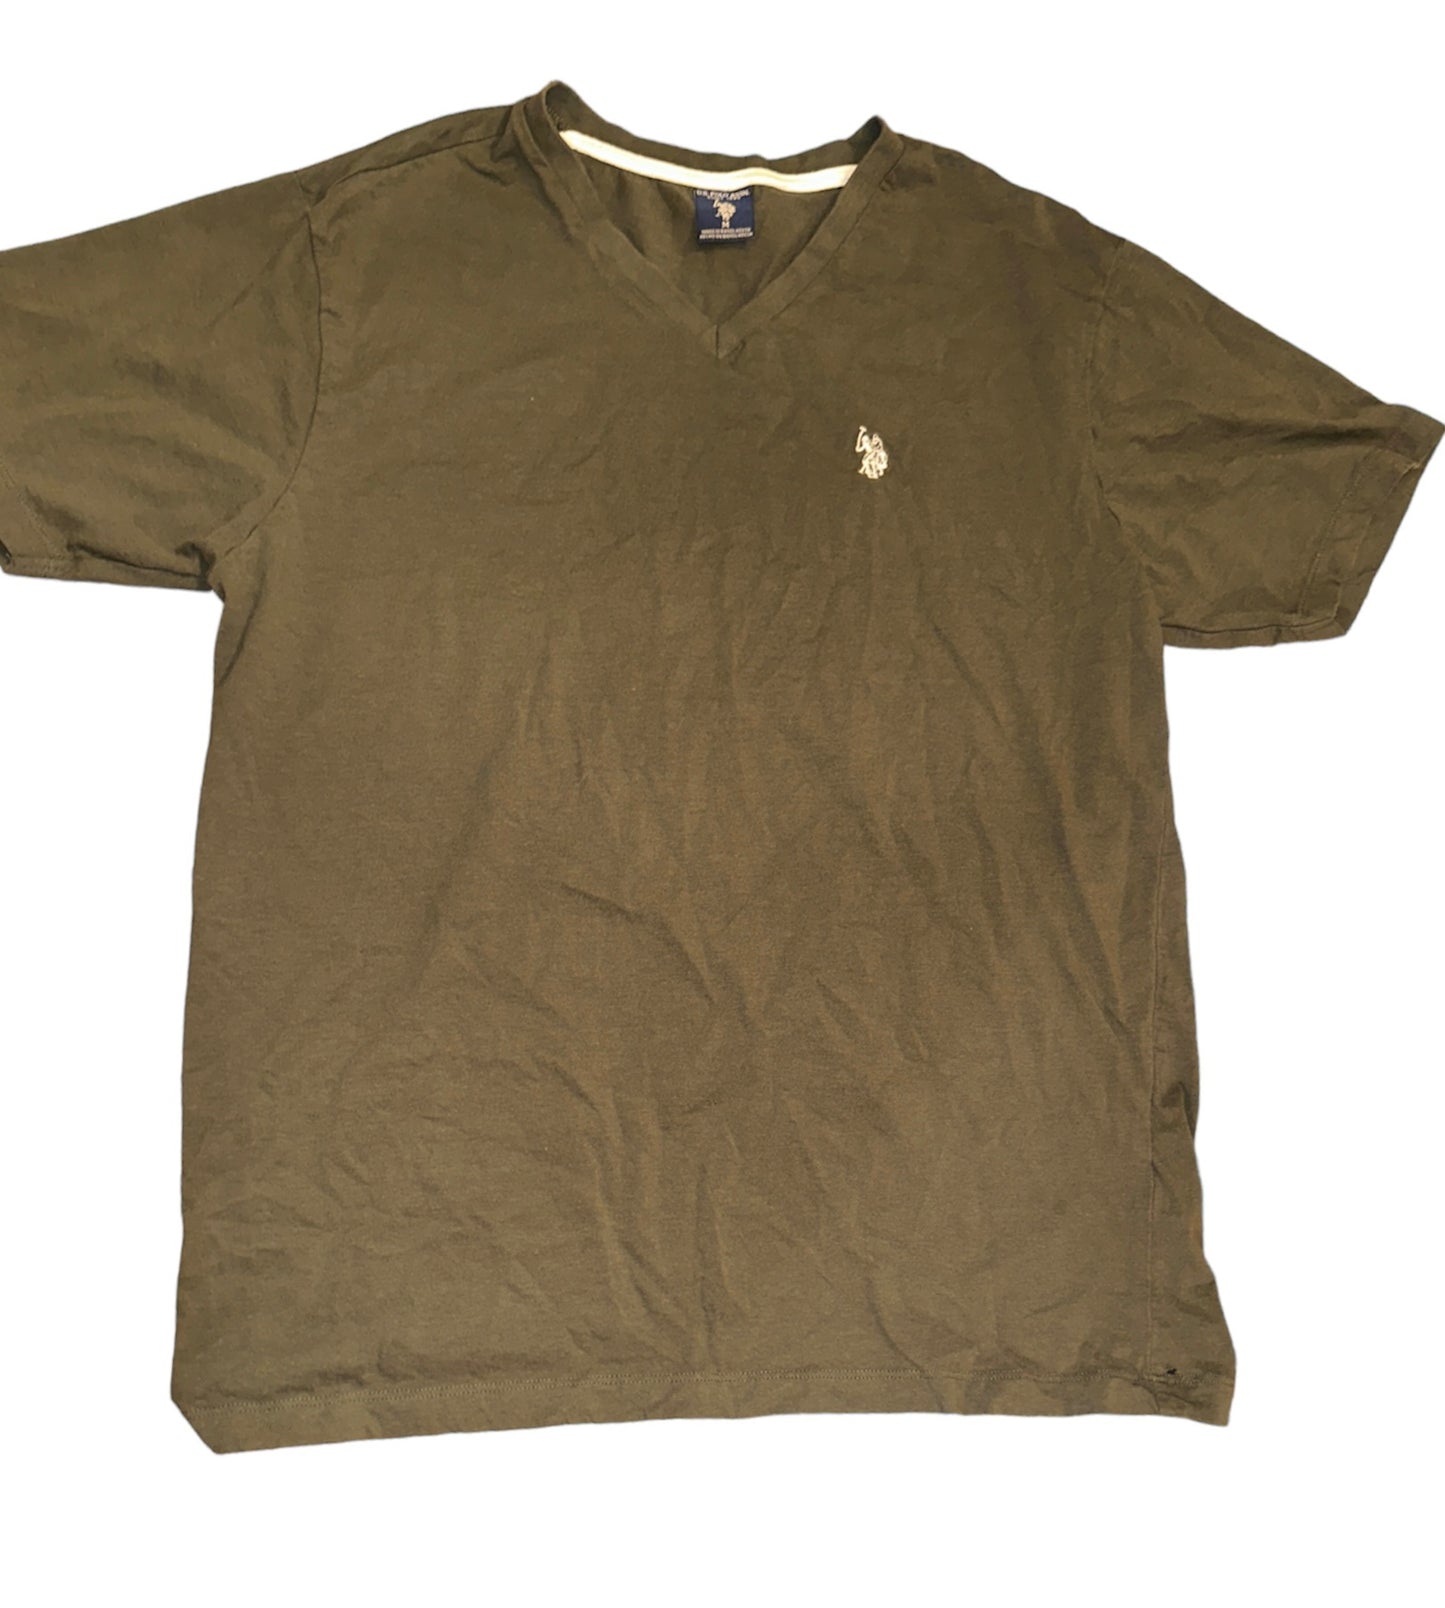 U.S. Polo Assn. - Olive Green T-shirt